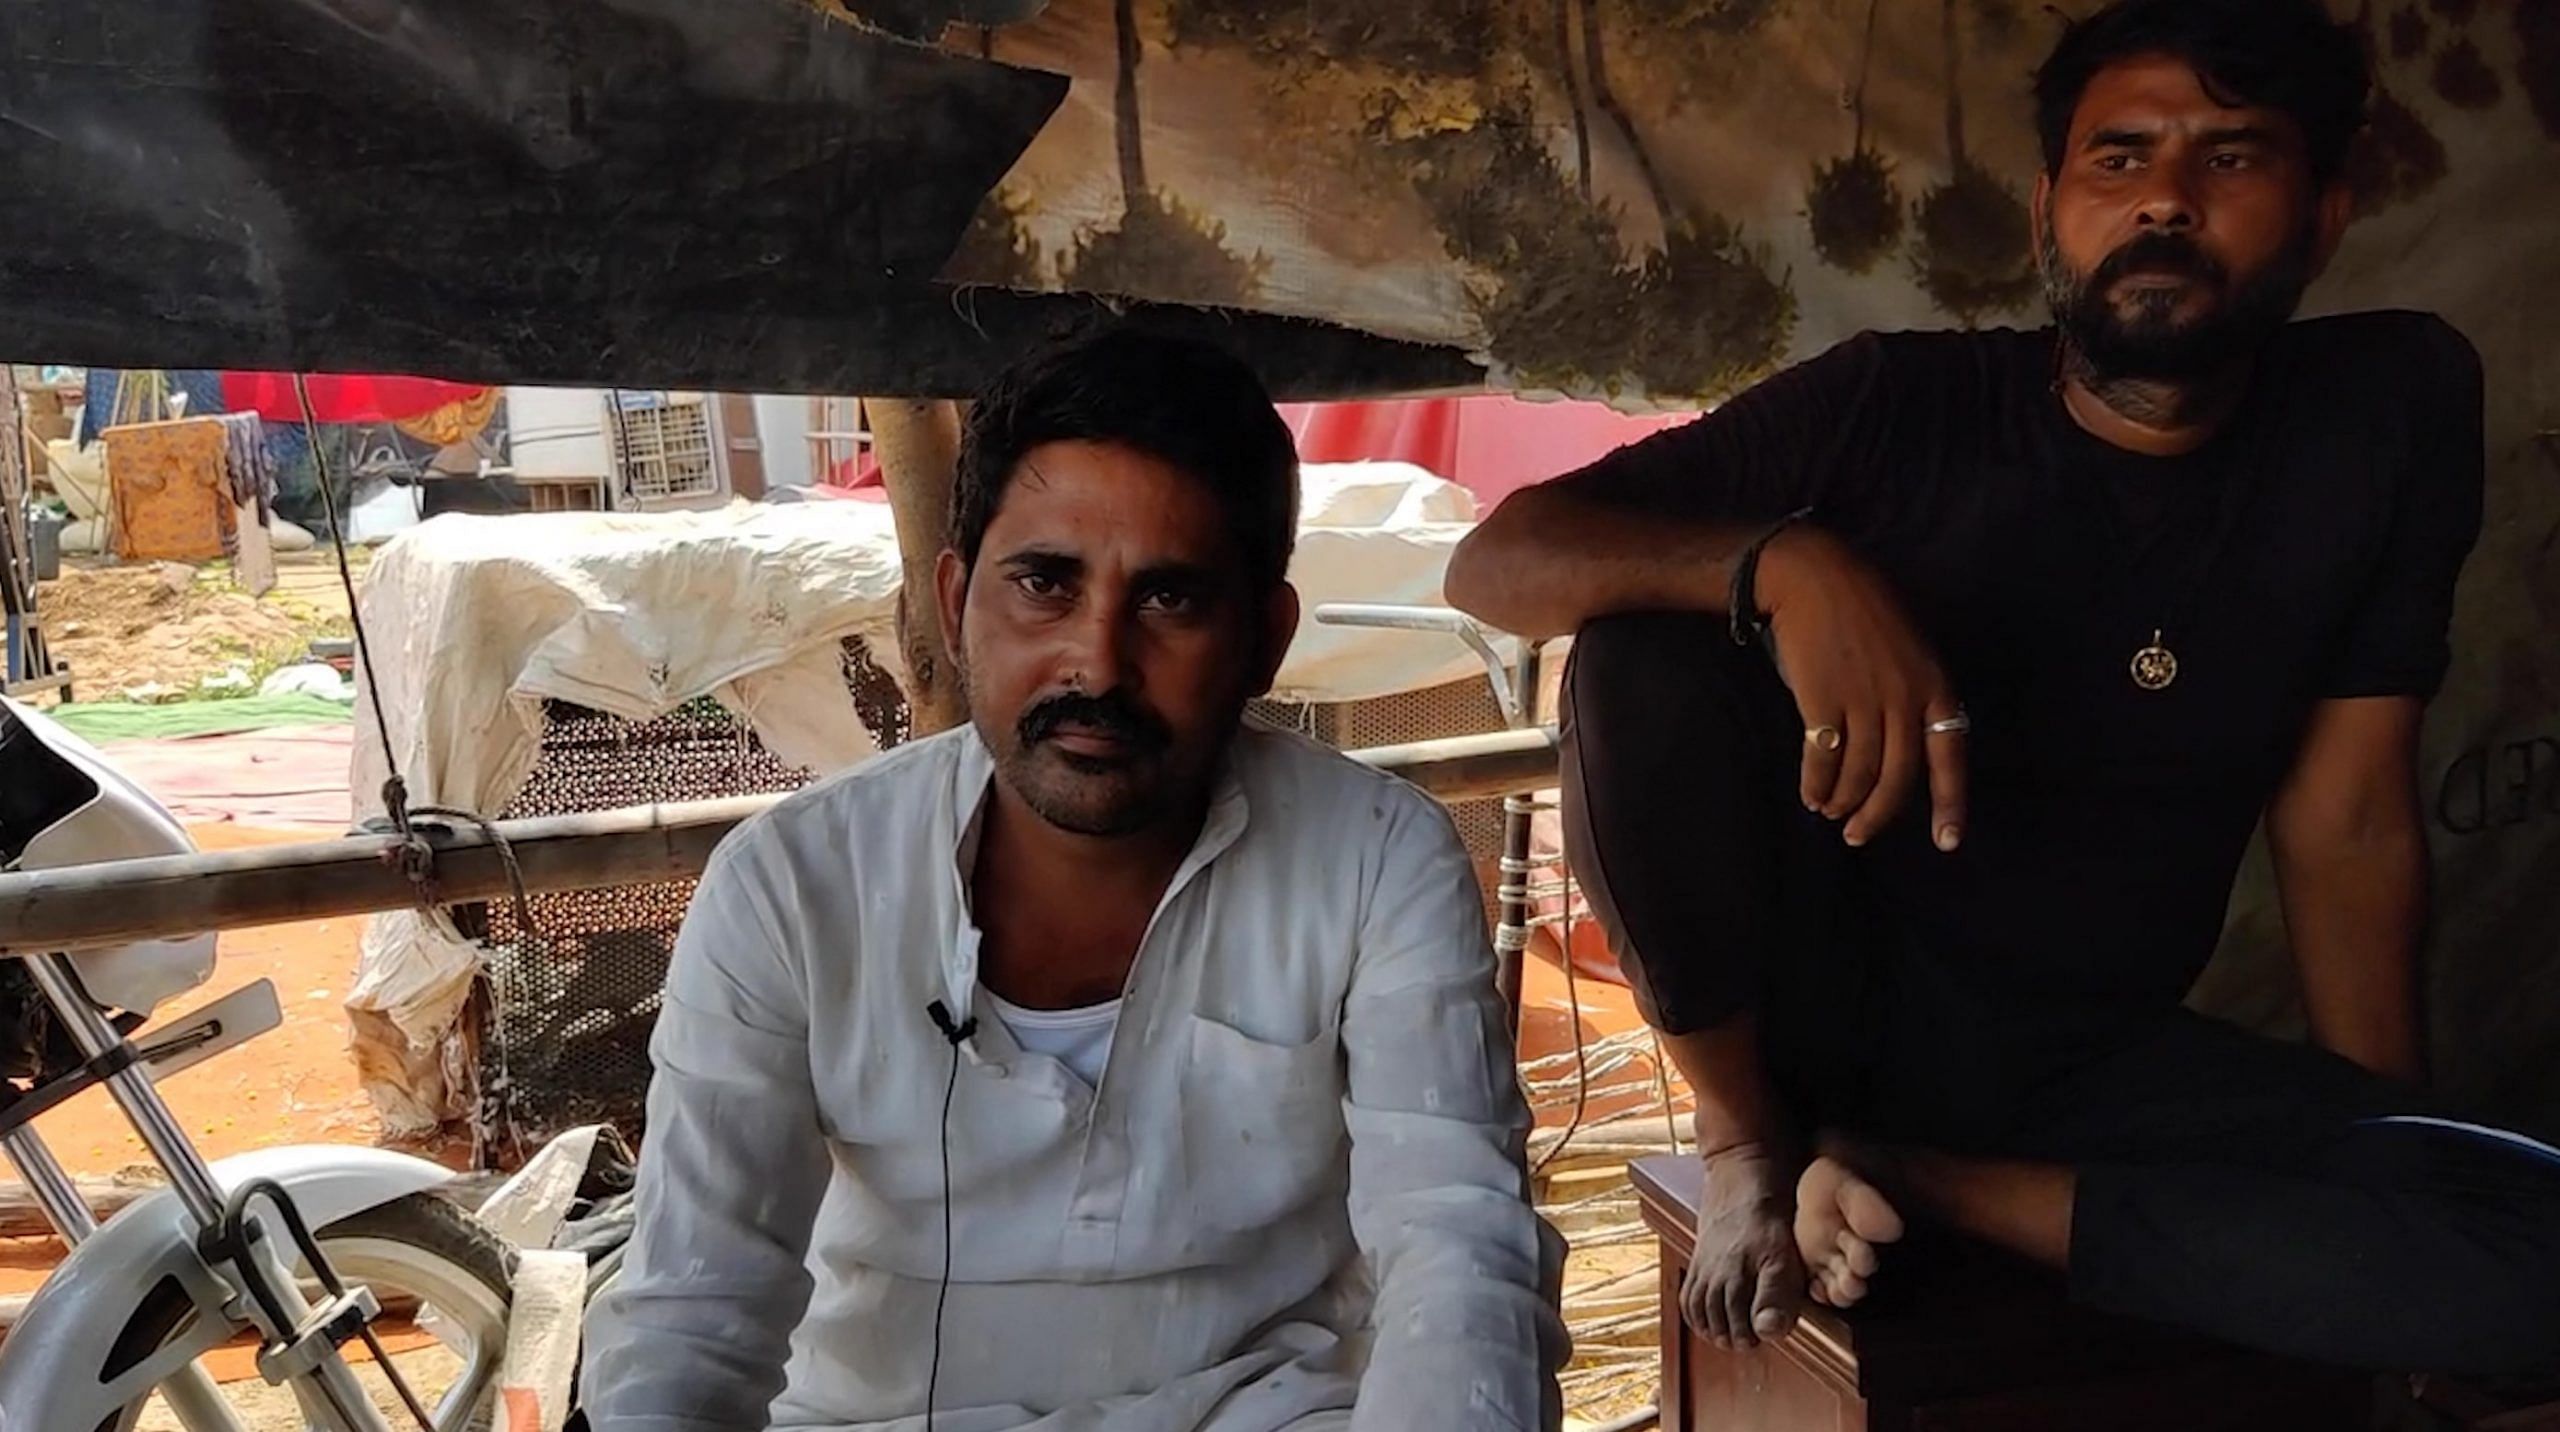 Satish (left, in white shirt) is a local vendor and leader at the Banjara market | Photo: Reeti Agarwal